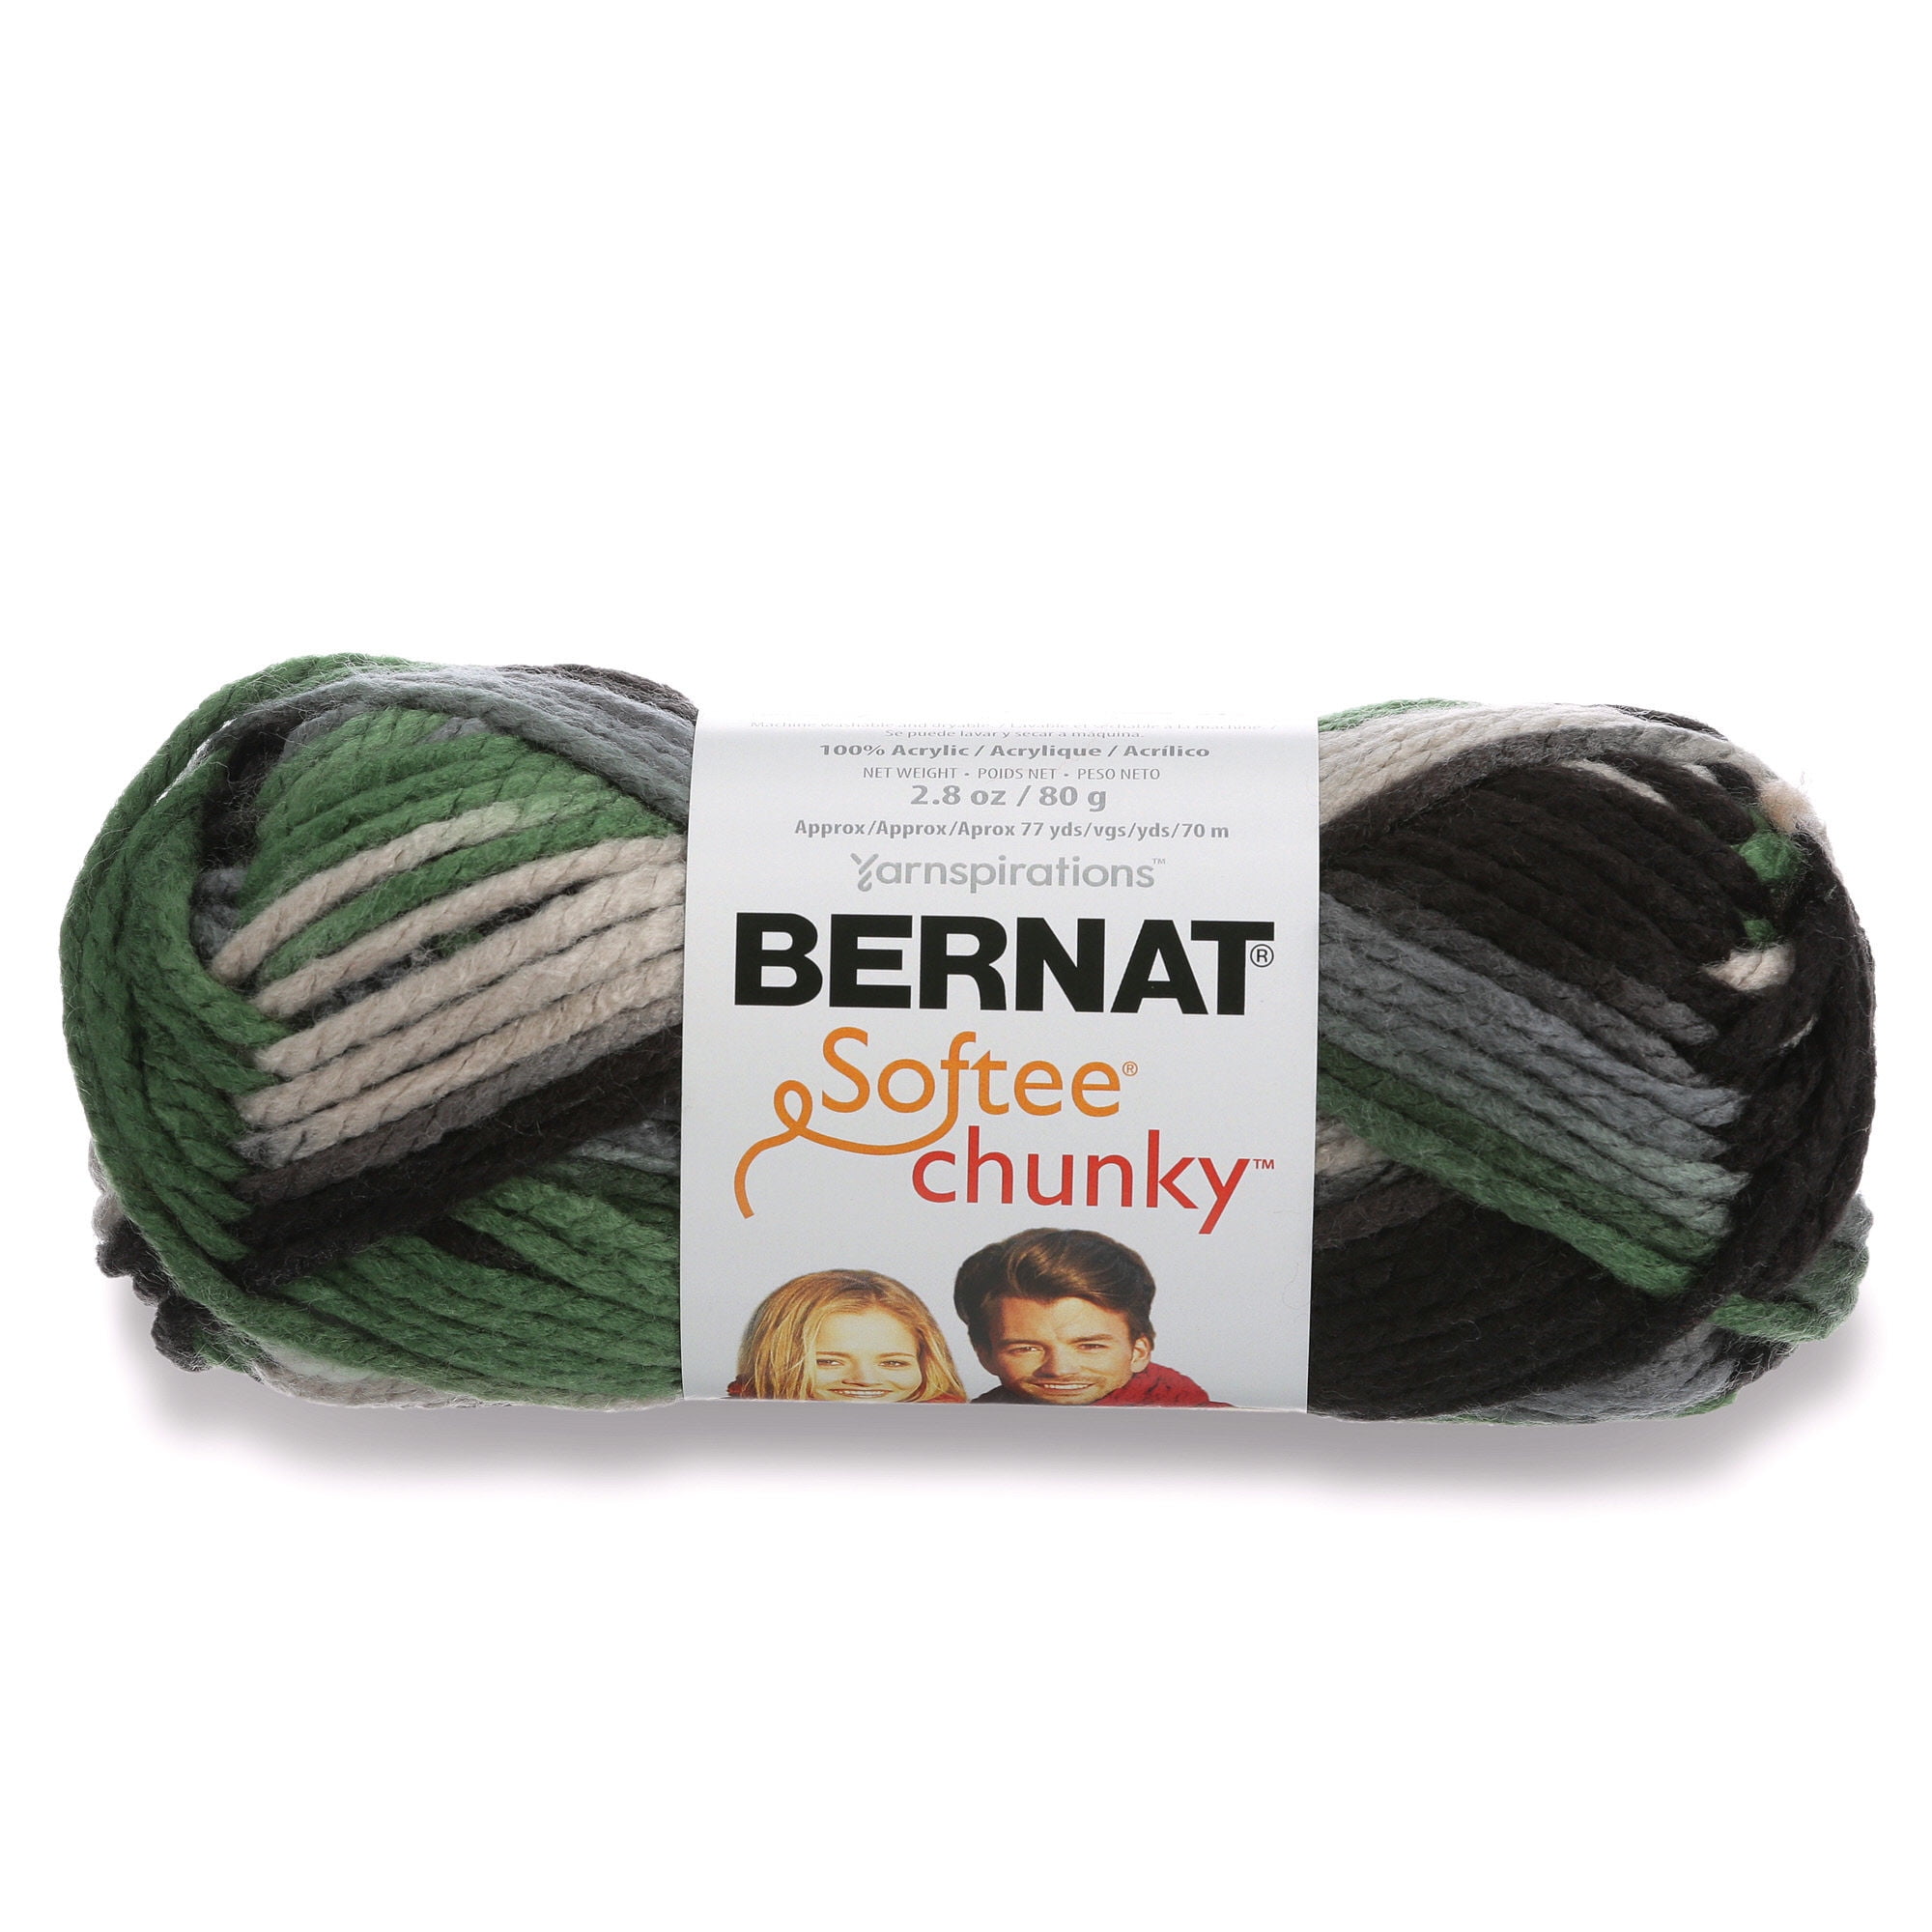 Bernat Softee Chunky Yarn, Lot of 4, Super Bulky, Color: 2 Black